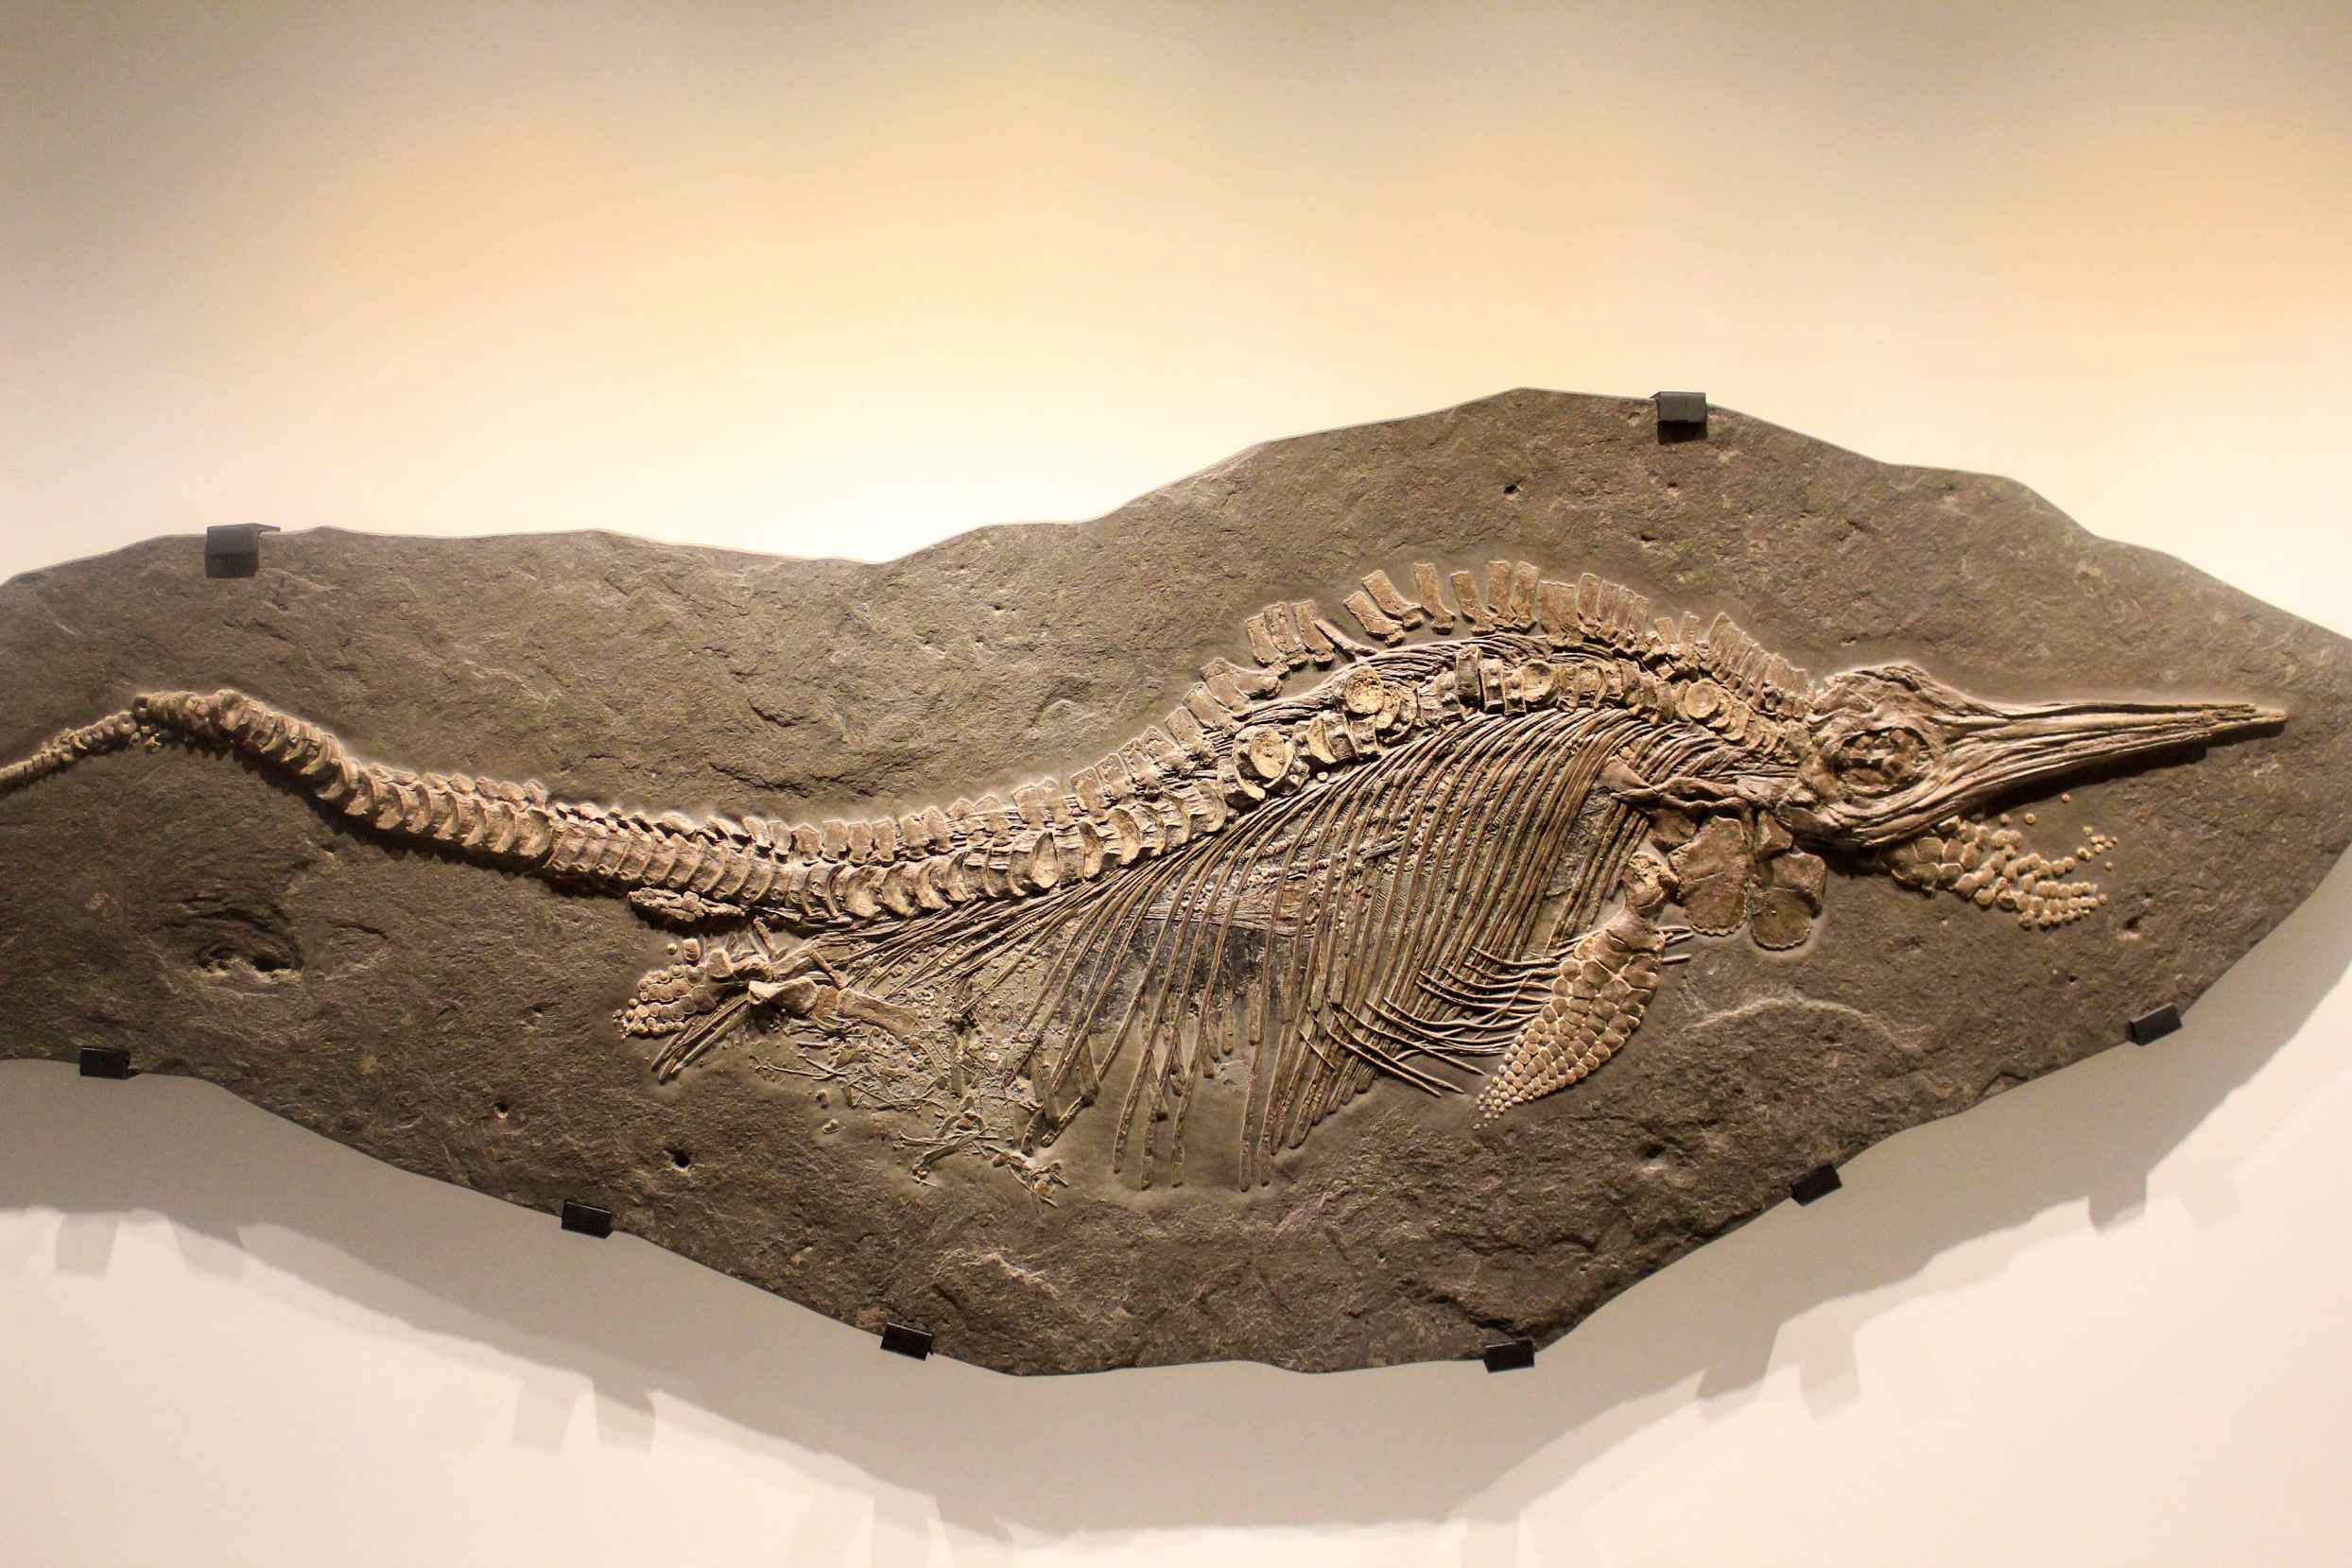 Bones and remains of prehistoric animals An Ichthyosaur or shark lizard fossil